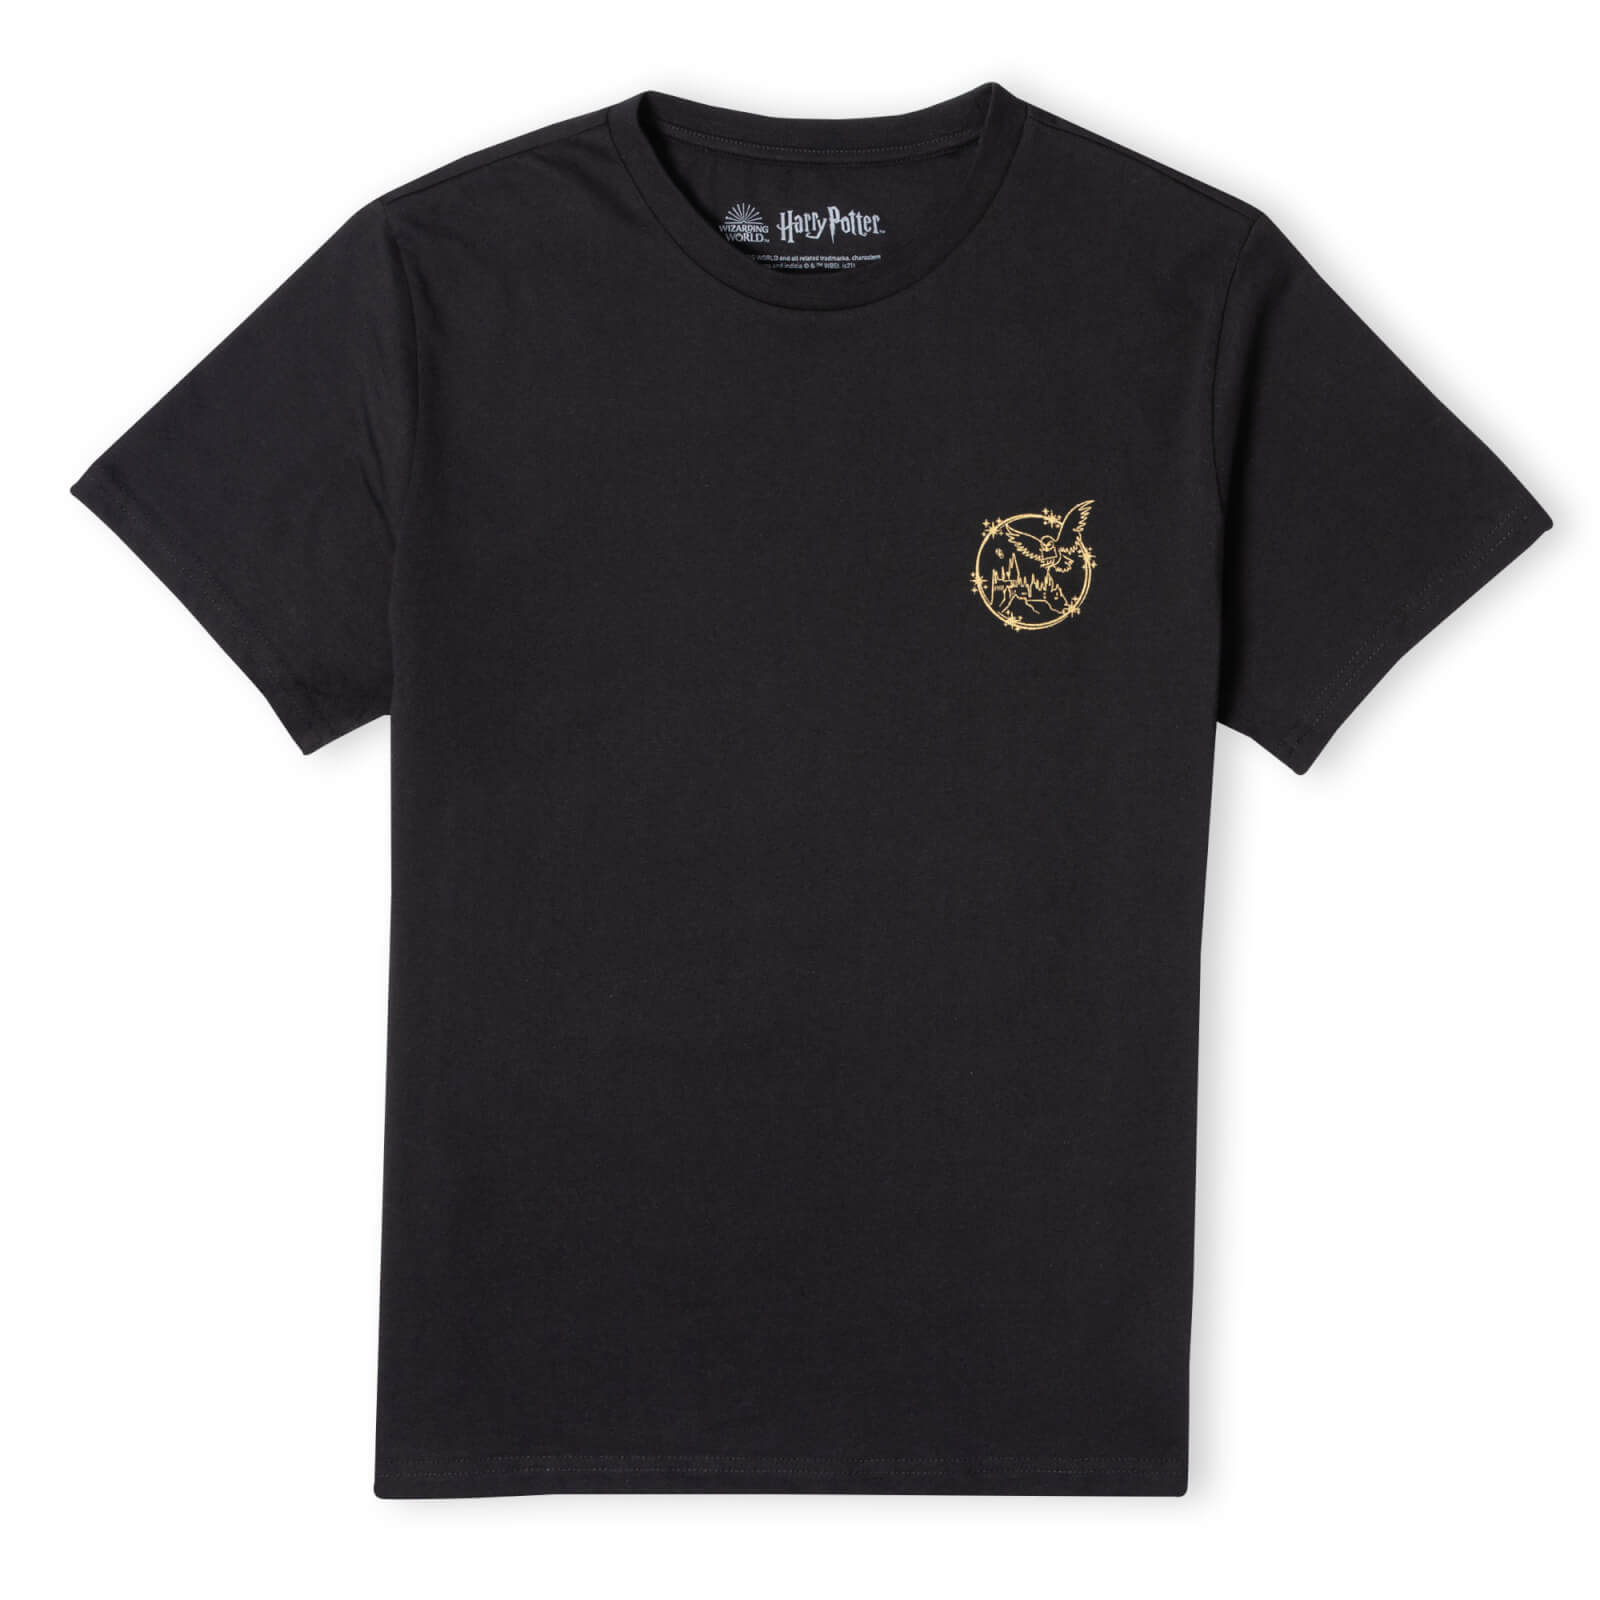 harry potter metallic pocket print women's t-shirt - black - m